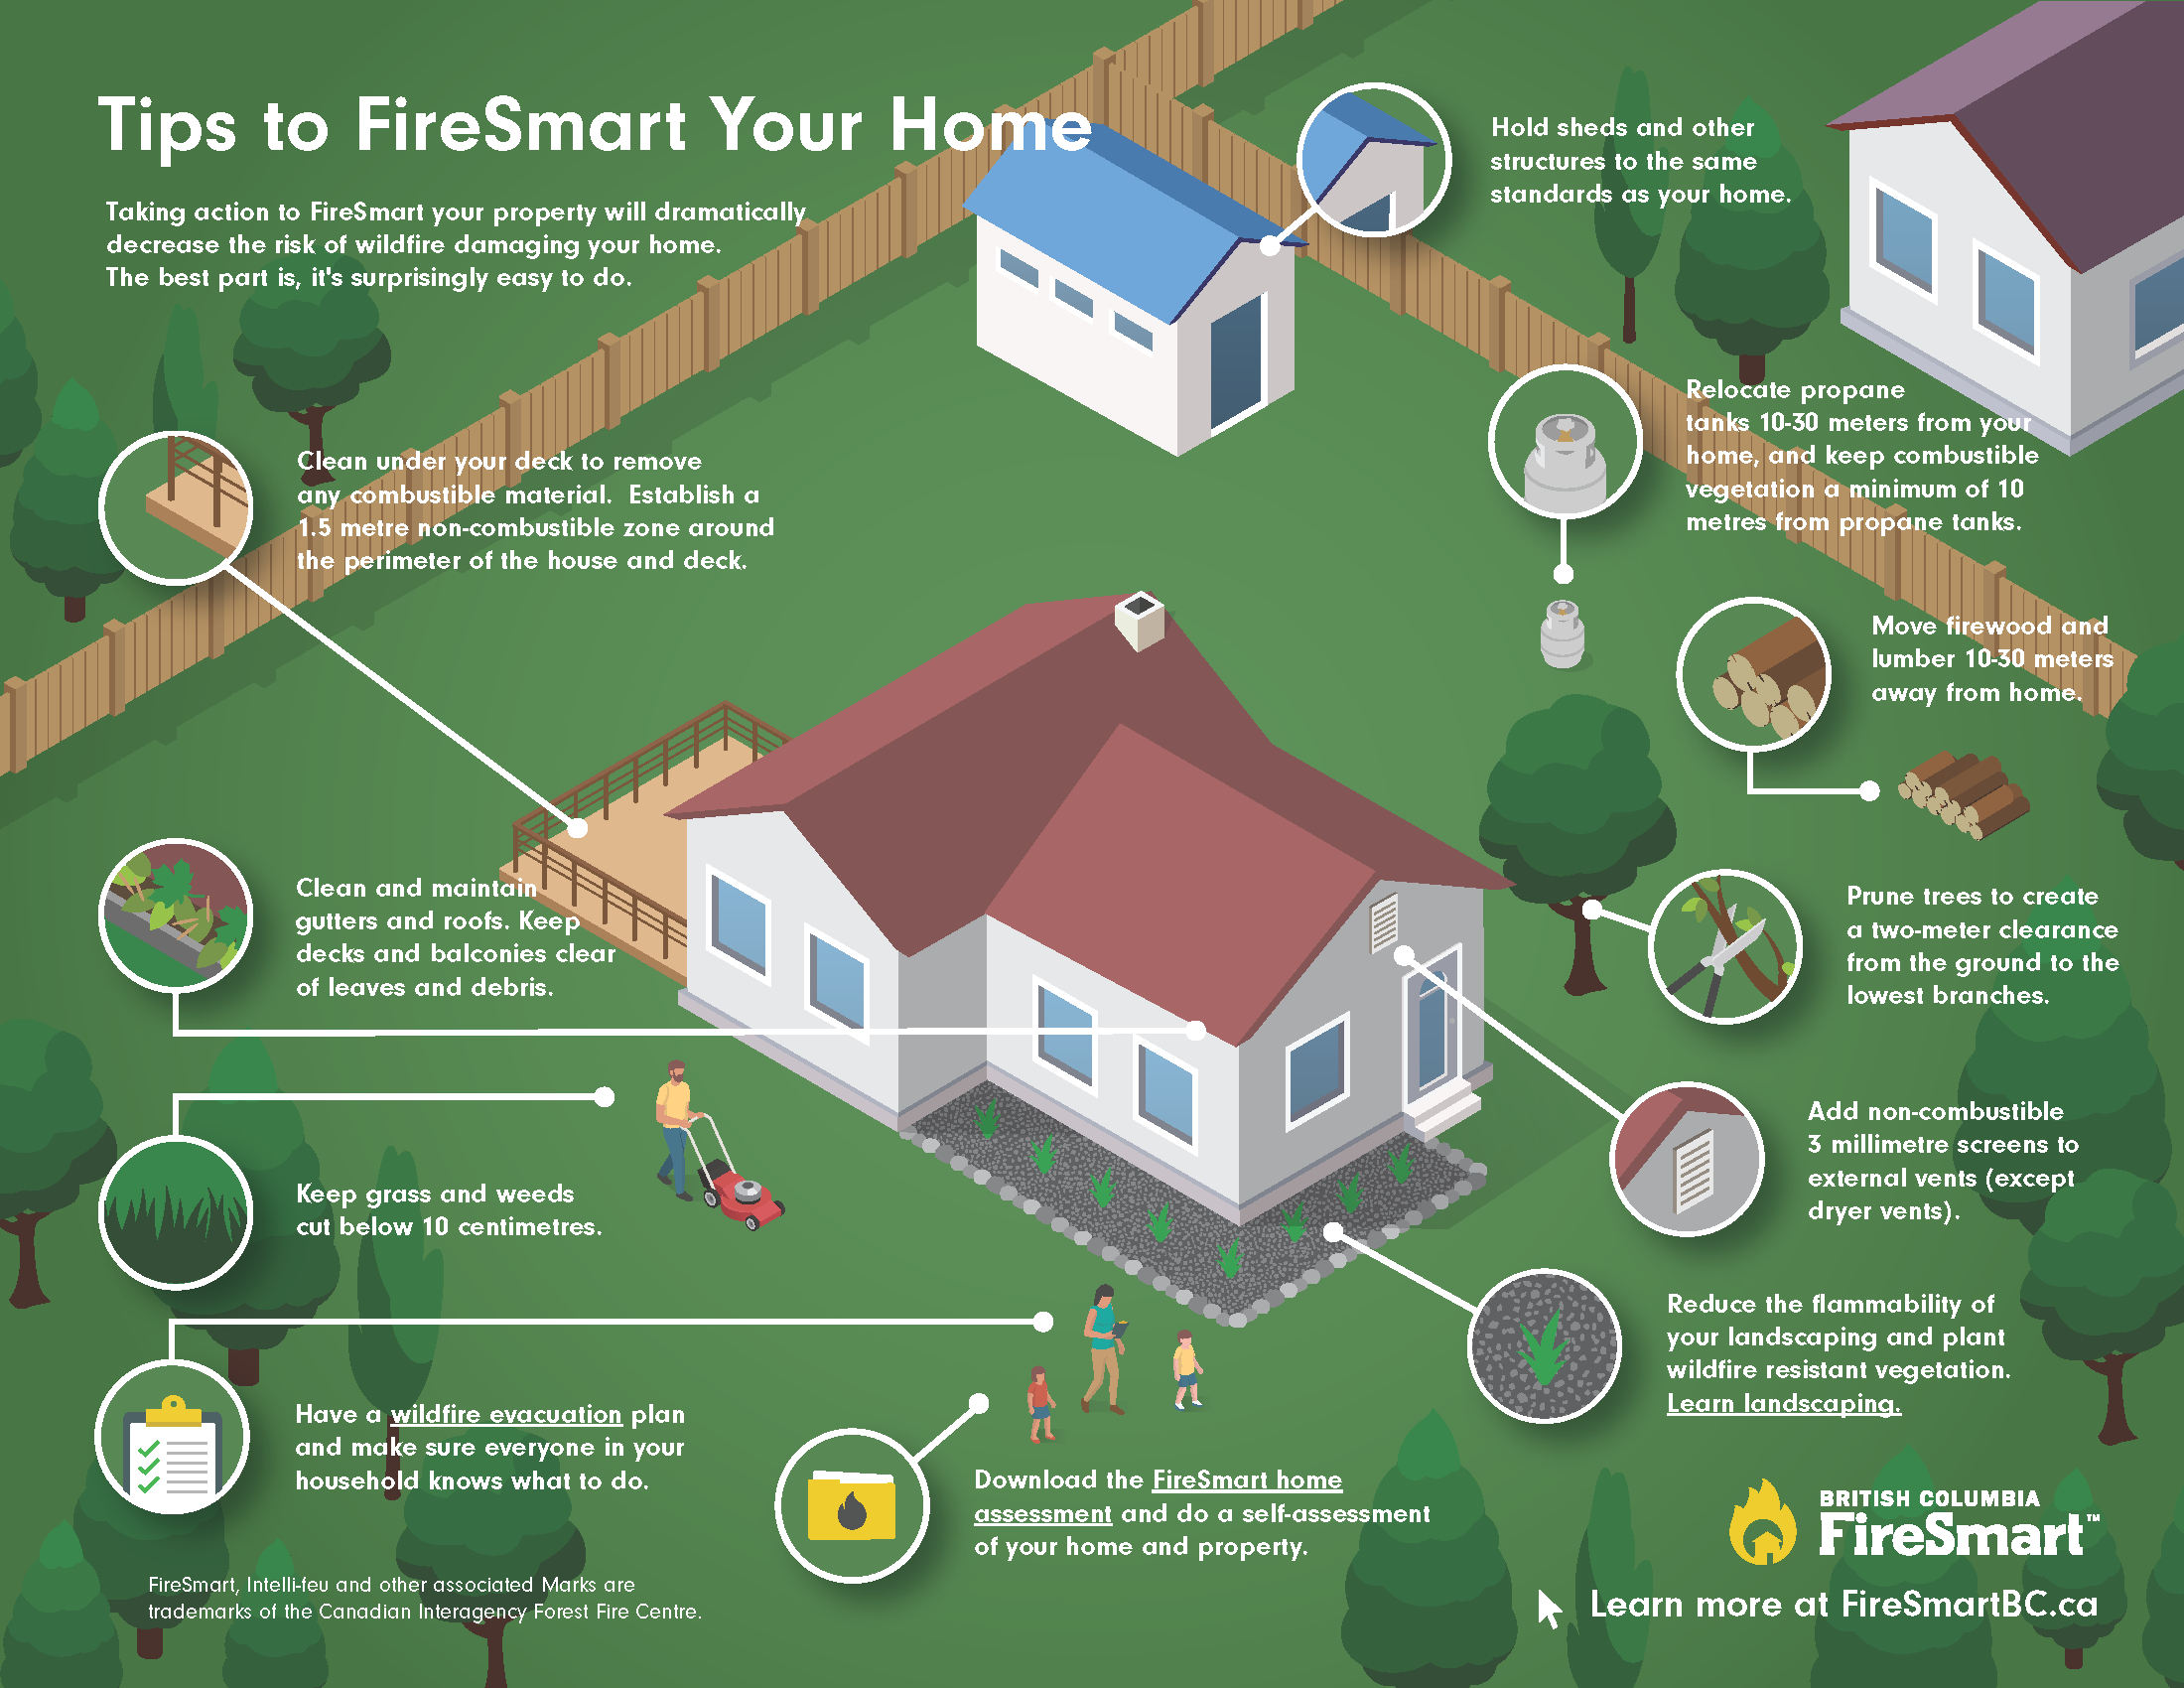 firesmart your home tips